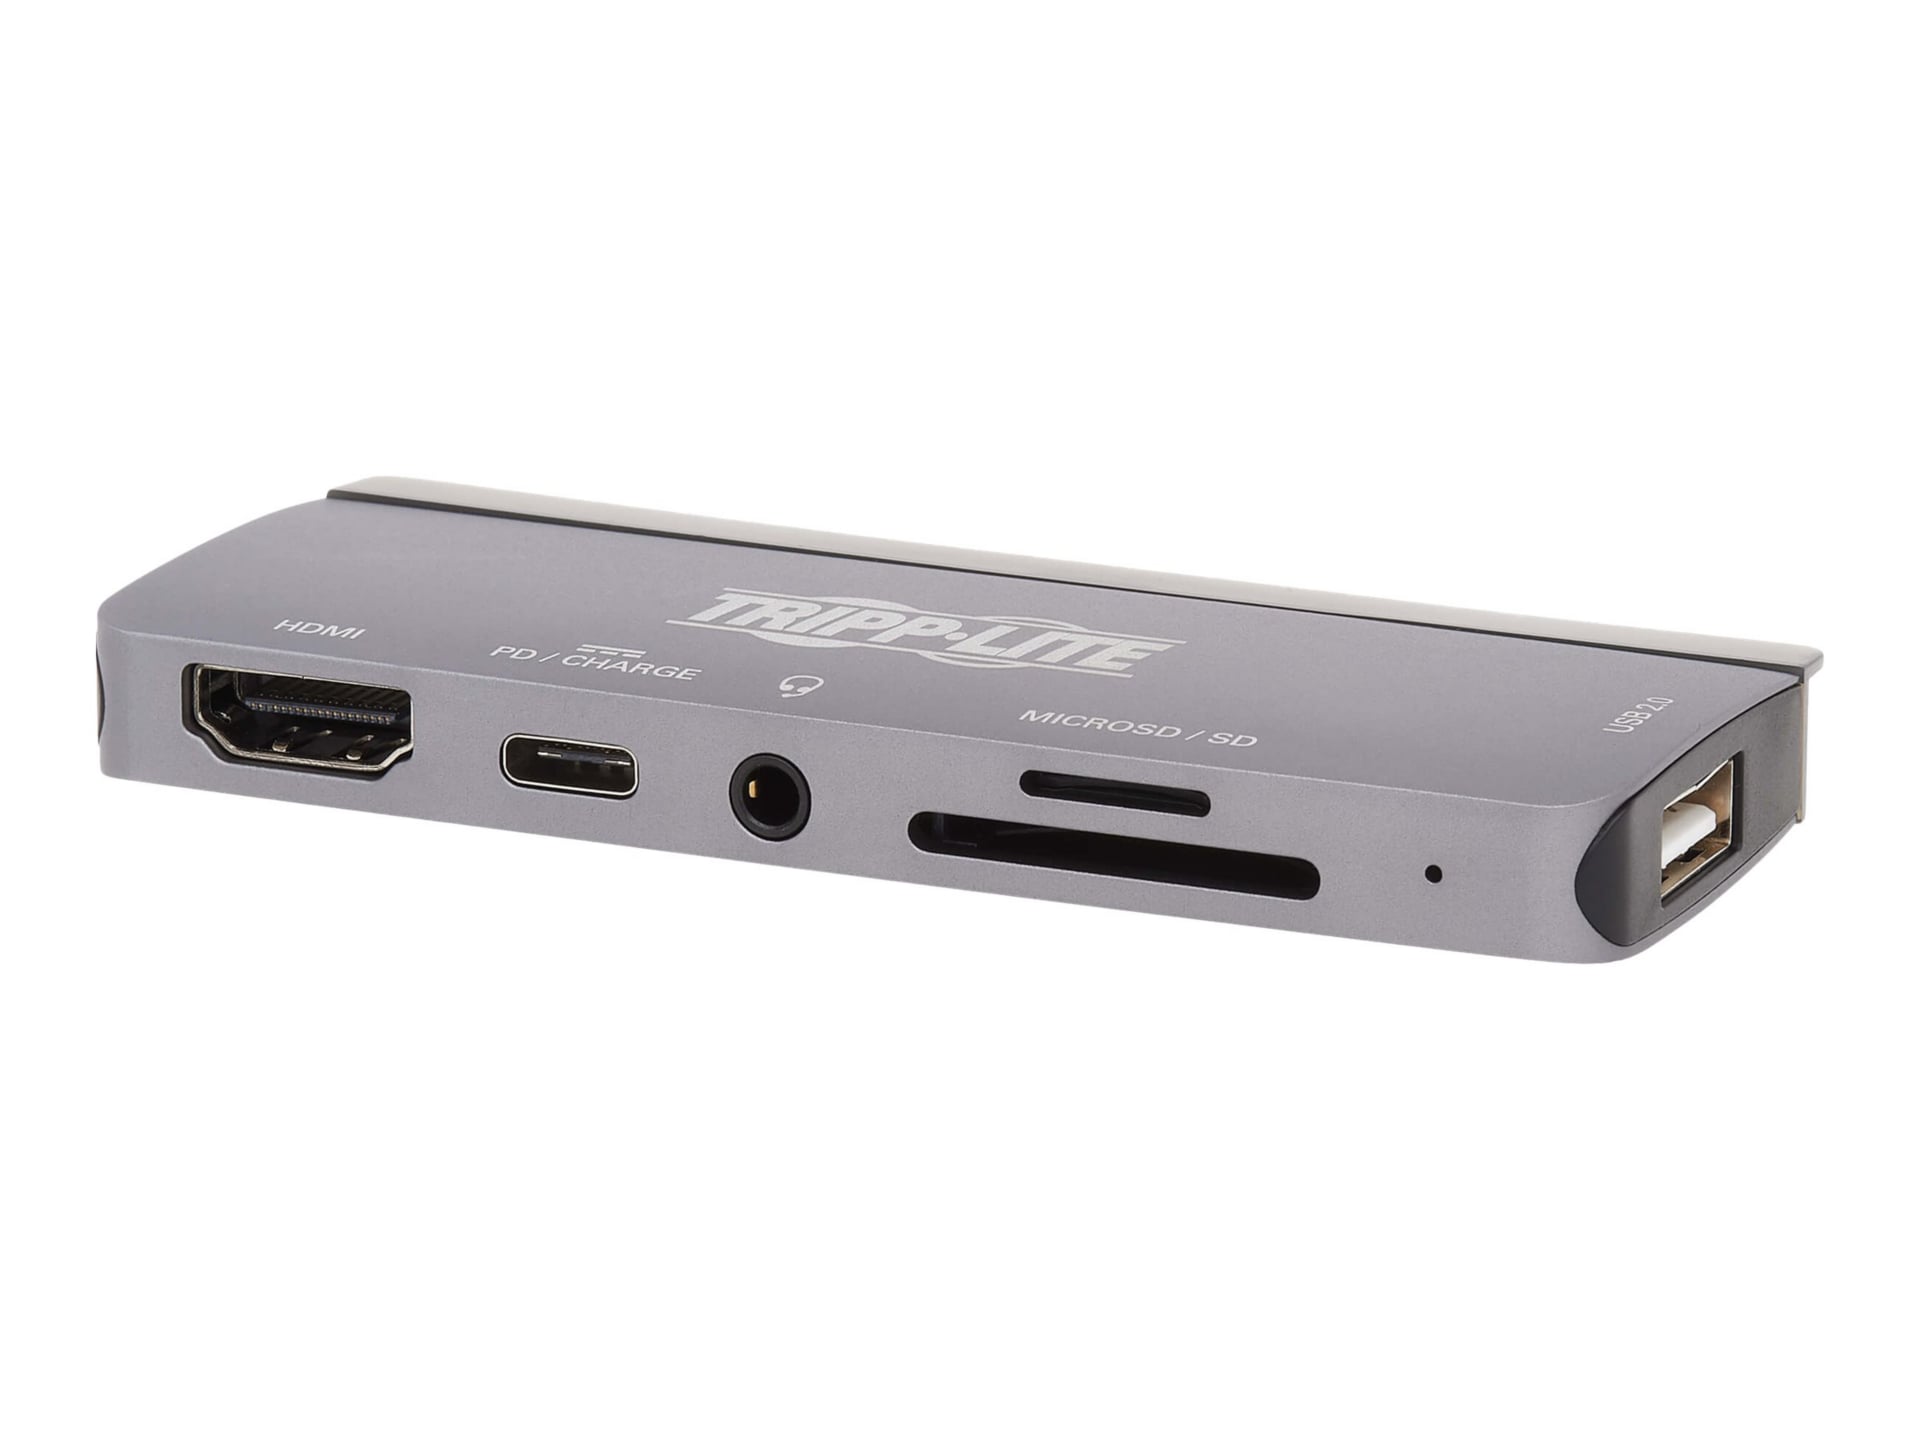 Tripp Lite USB C Docking Station HDMI USB-A SD/Micro SD PD Charging Gray - docking station - USB-C / Thunderbolt 3 -